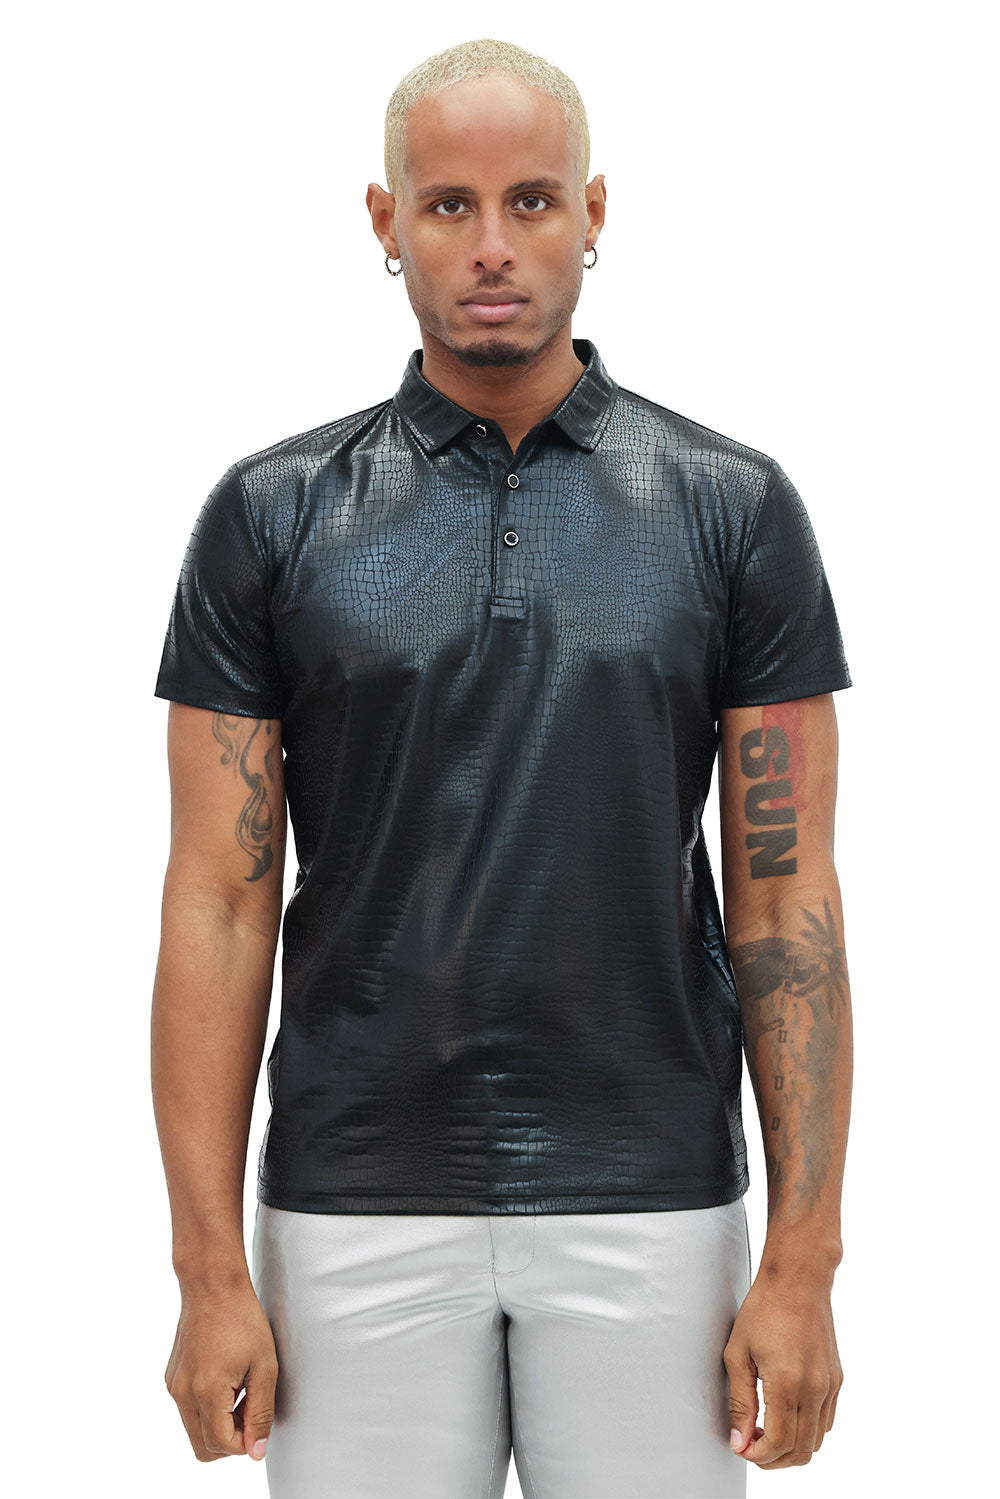 Barabas Men's Snake Luxury Metallic Print Design Polo Shirt 2PP831 Black